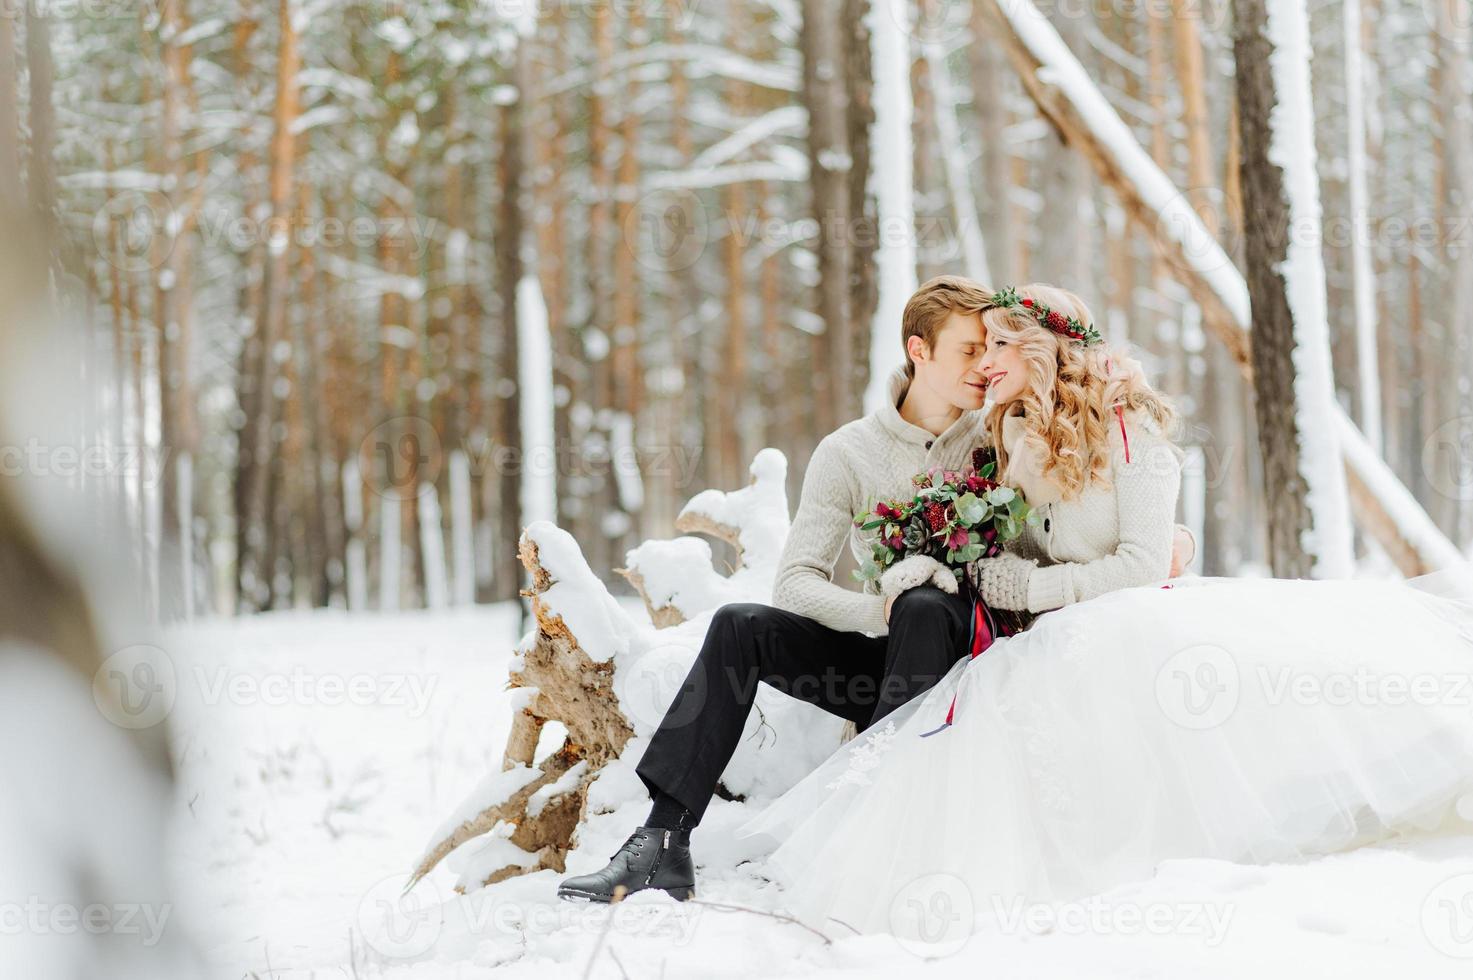 winter bruiloft fotosessie in de natuur foto